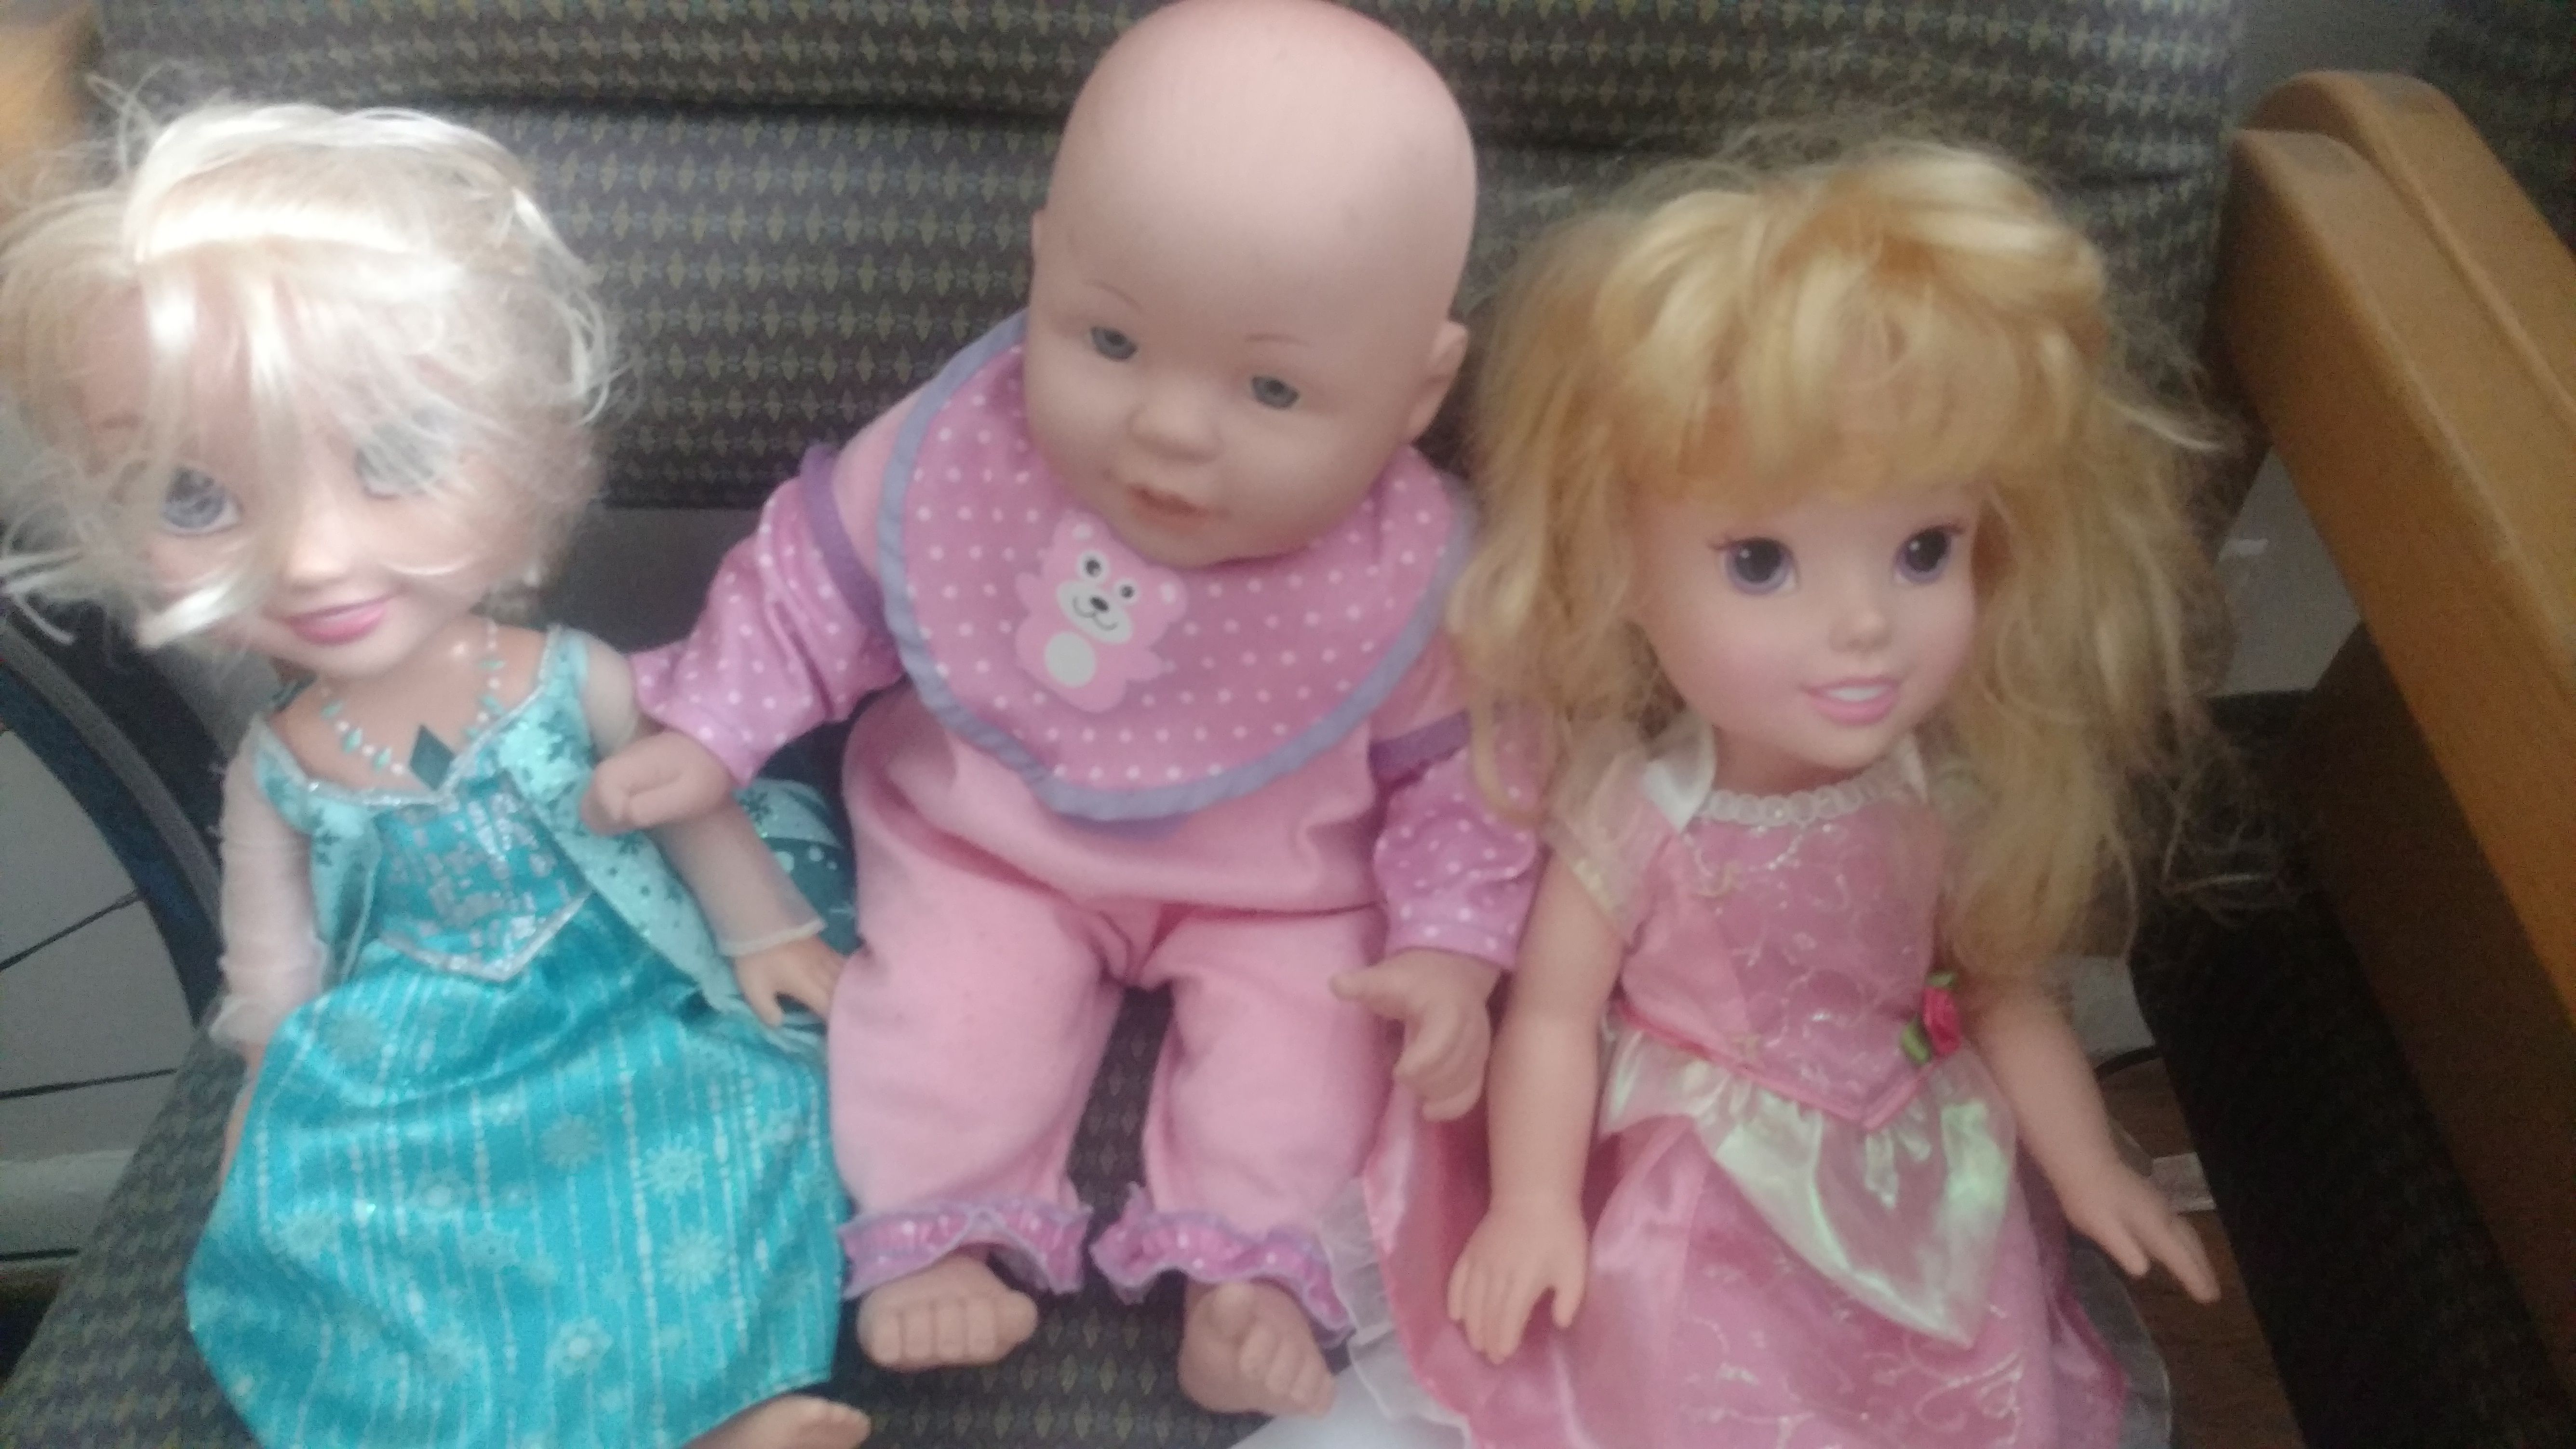 Wonderful set of DOLLS. The dolls wear pretty princess dresses.